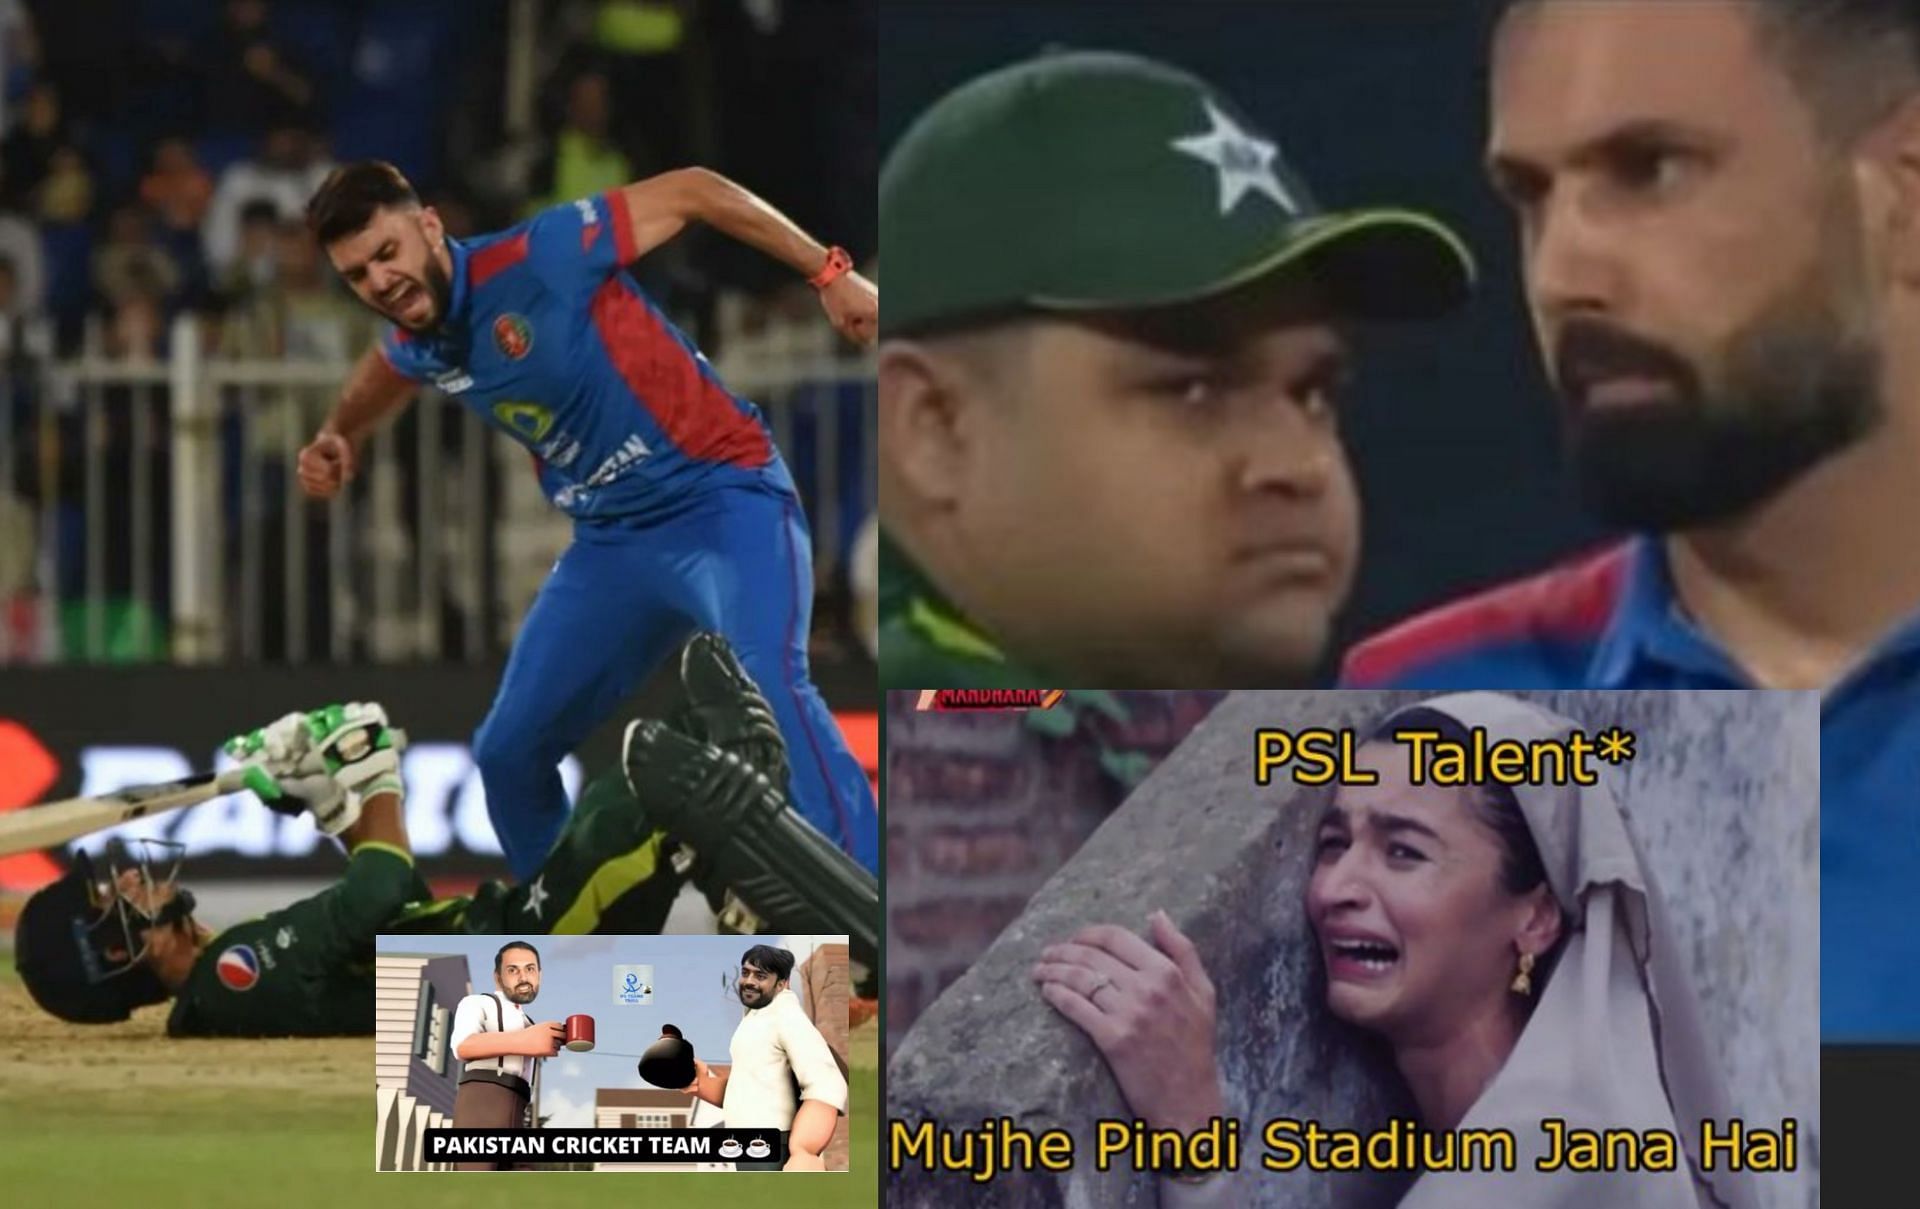 Pakistan Meme